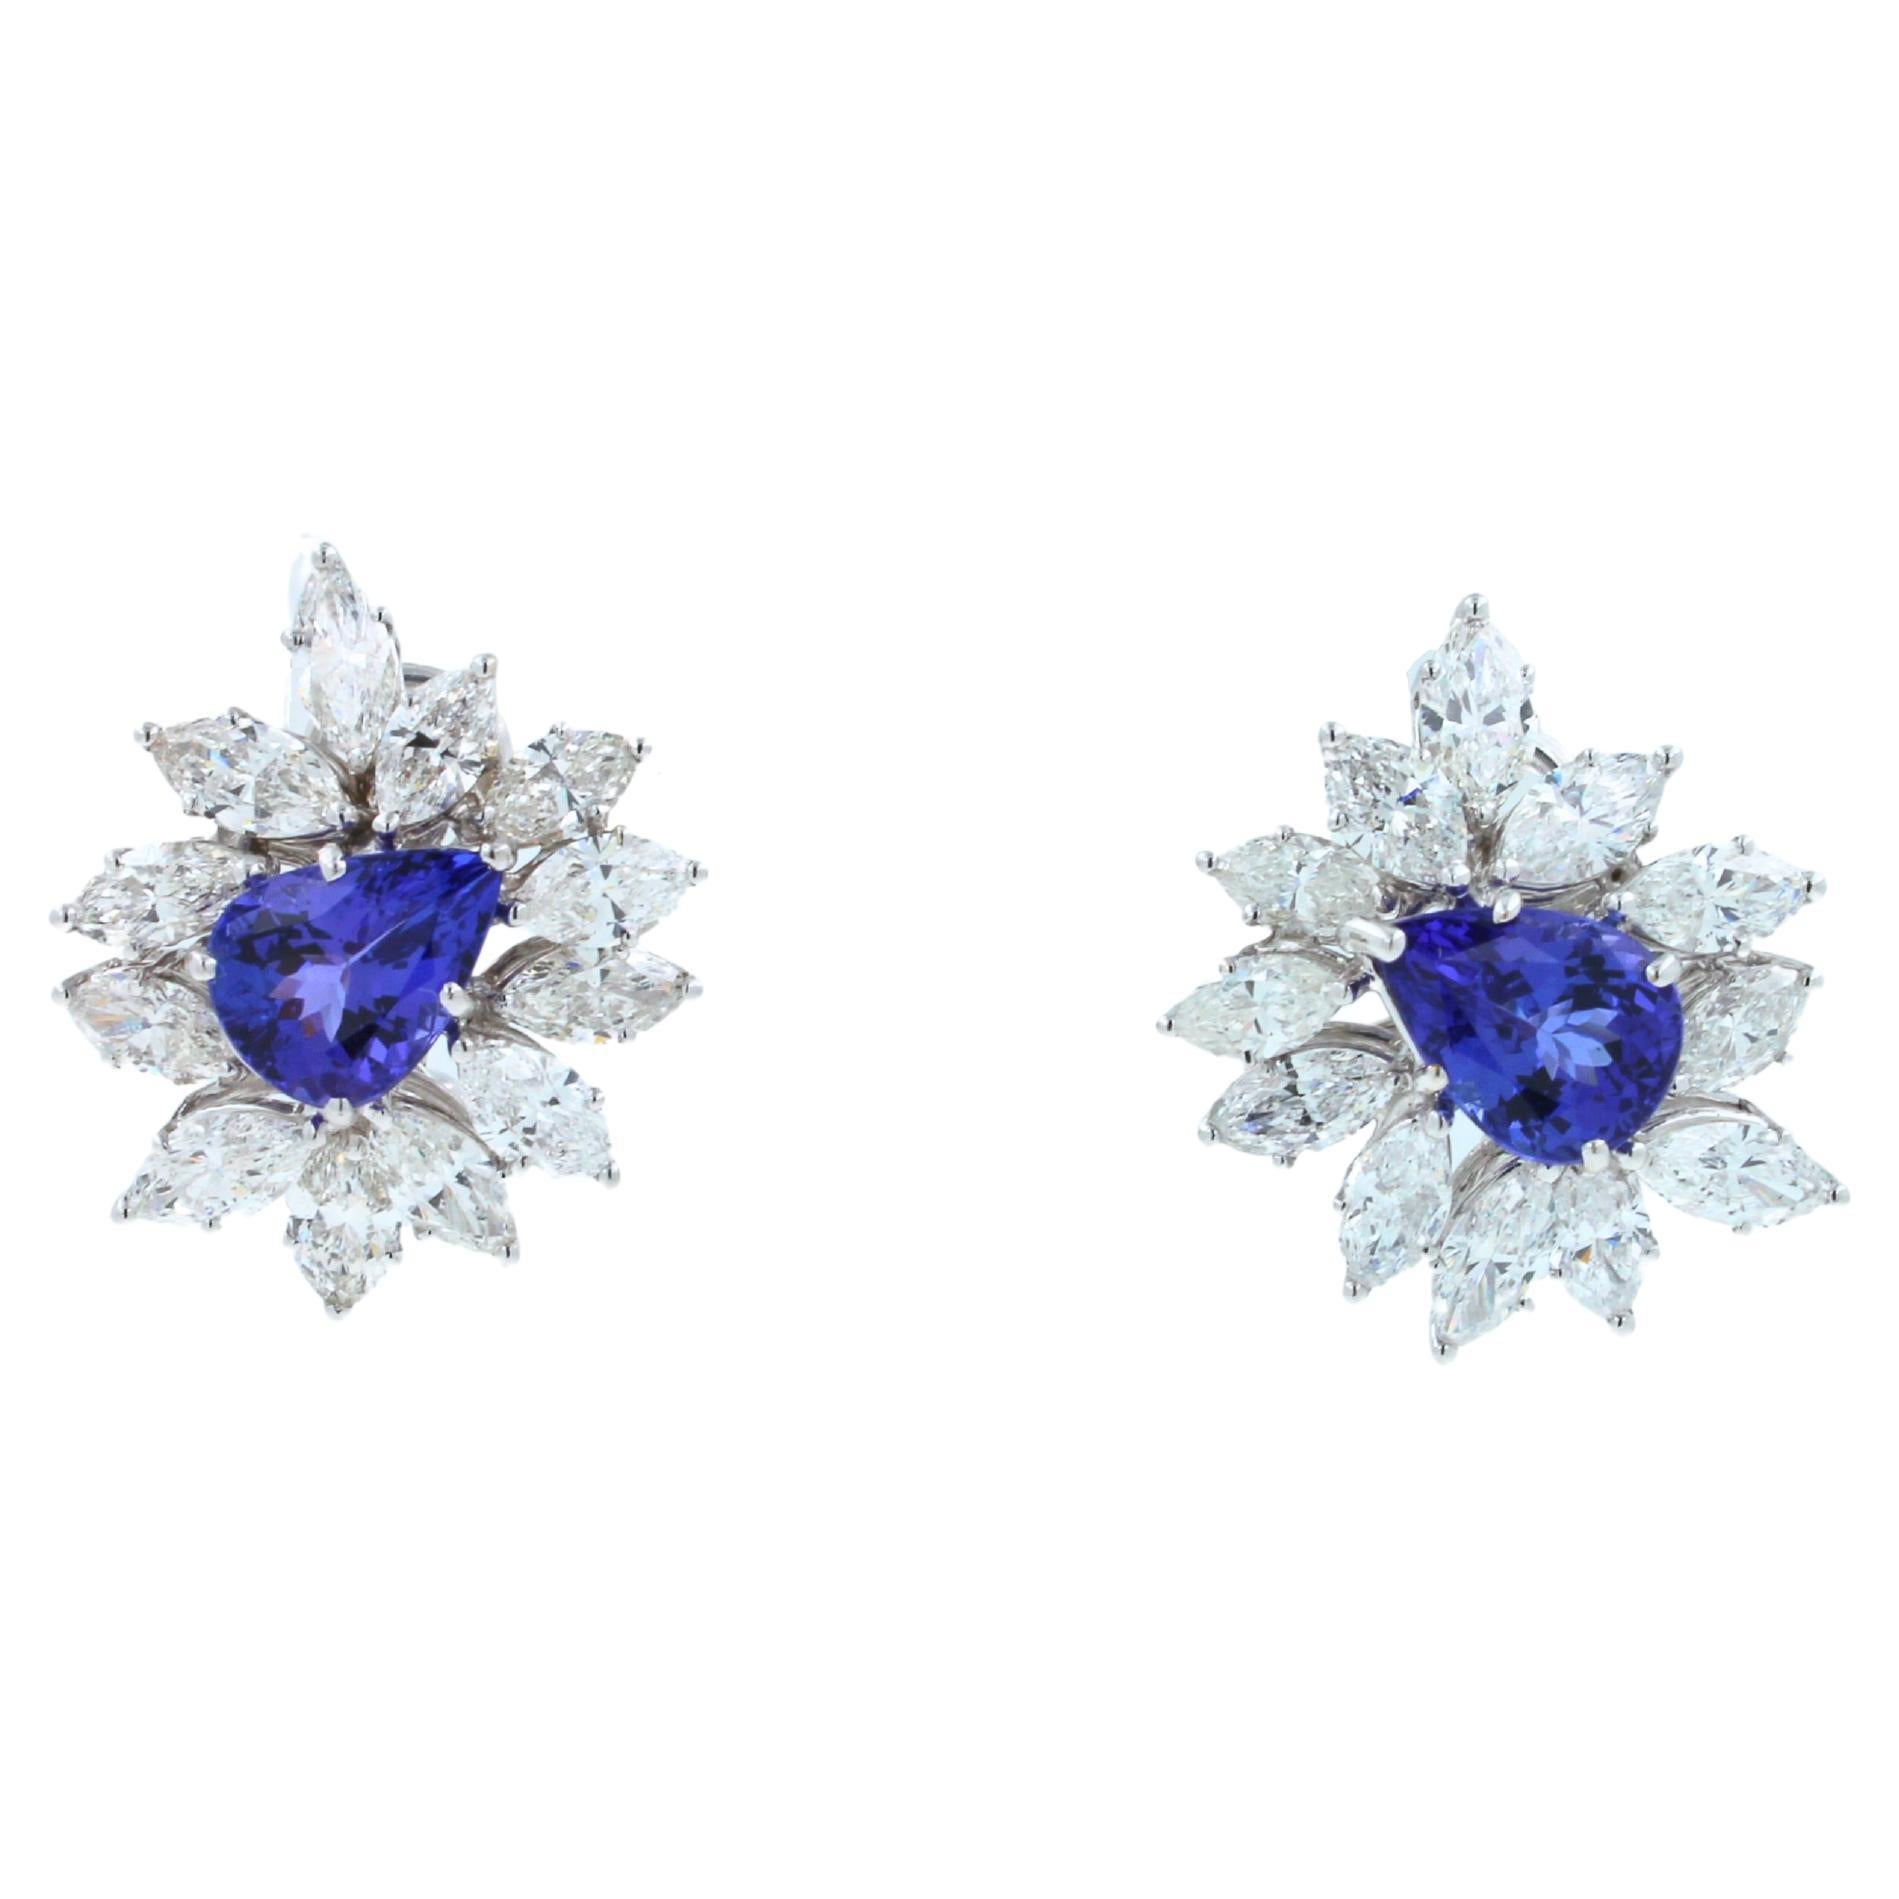 18K White Gold
8 Carats Violet - Blue Pear Cut - Drop Shape Tanzanites
13.00 ctw - G/VS diamonds 
15 grams
24 mm length earrings 

